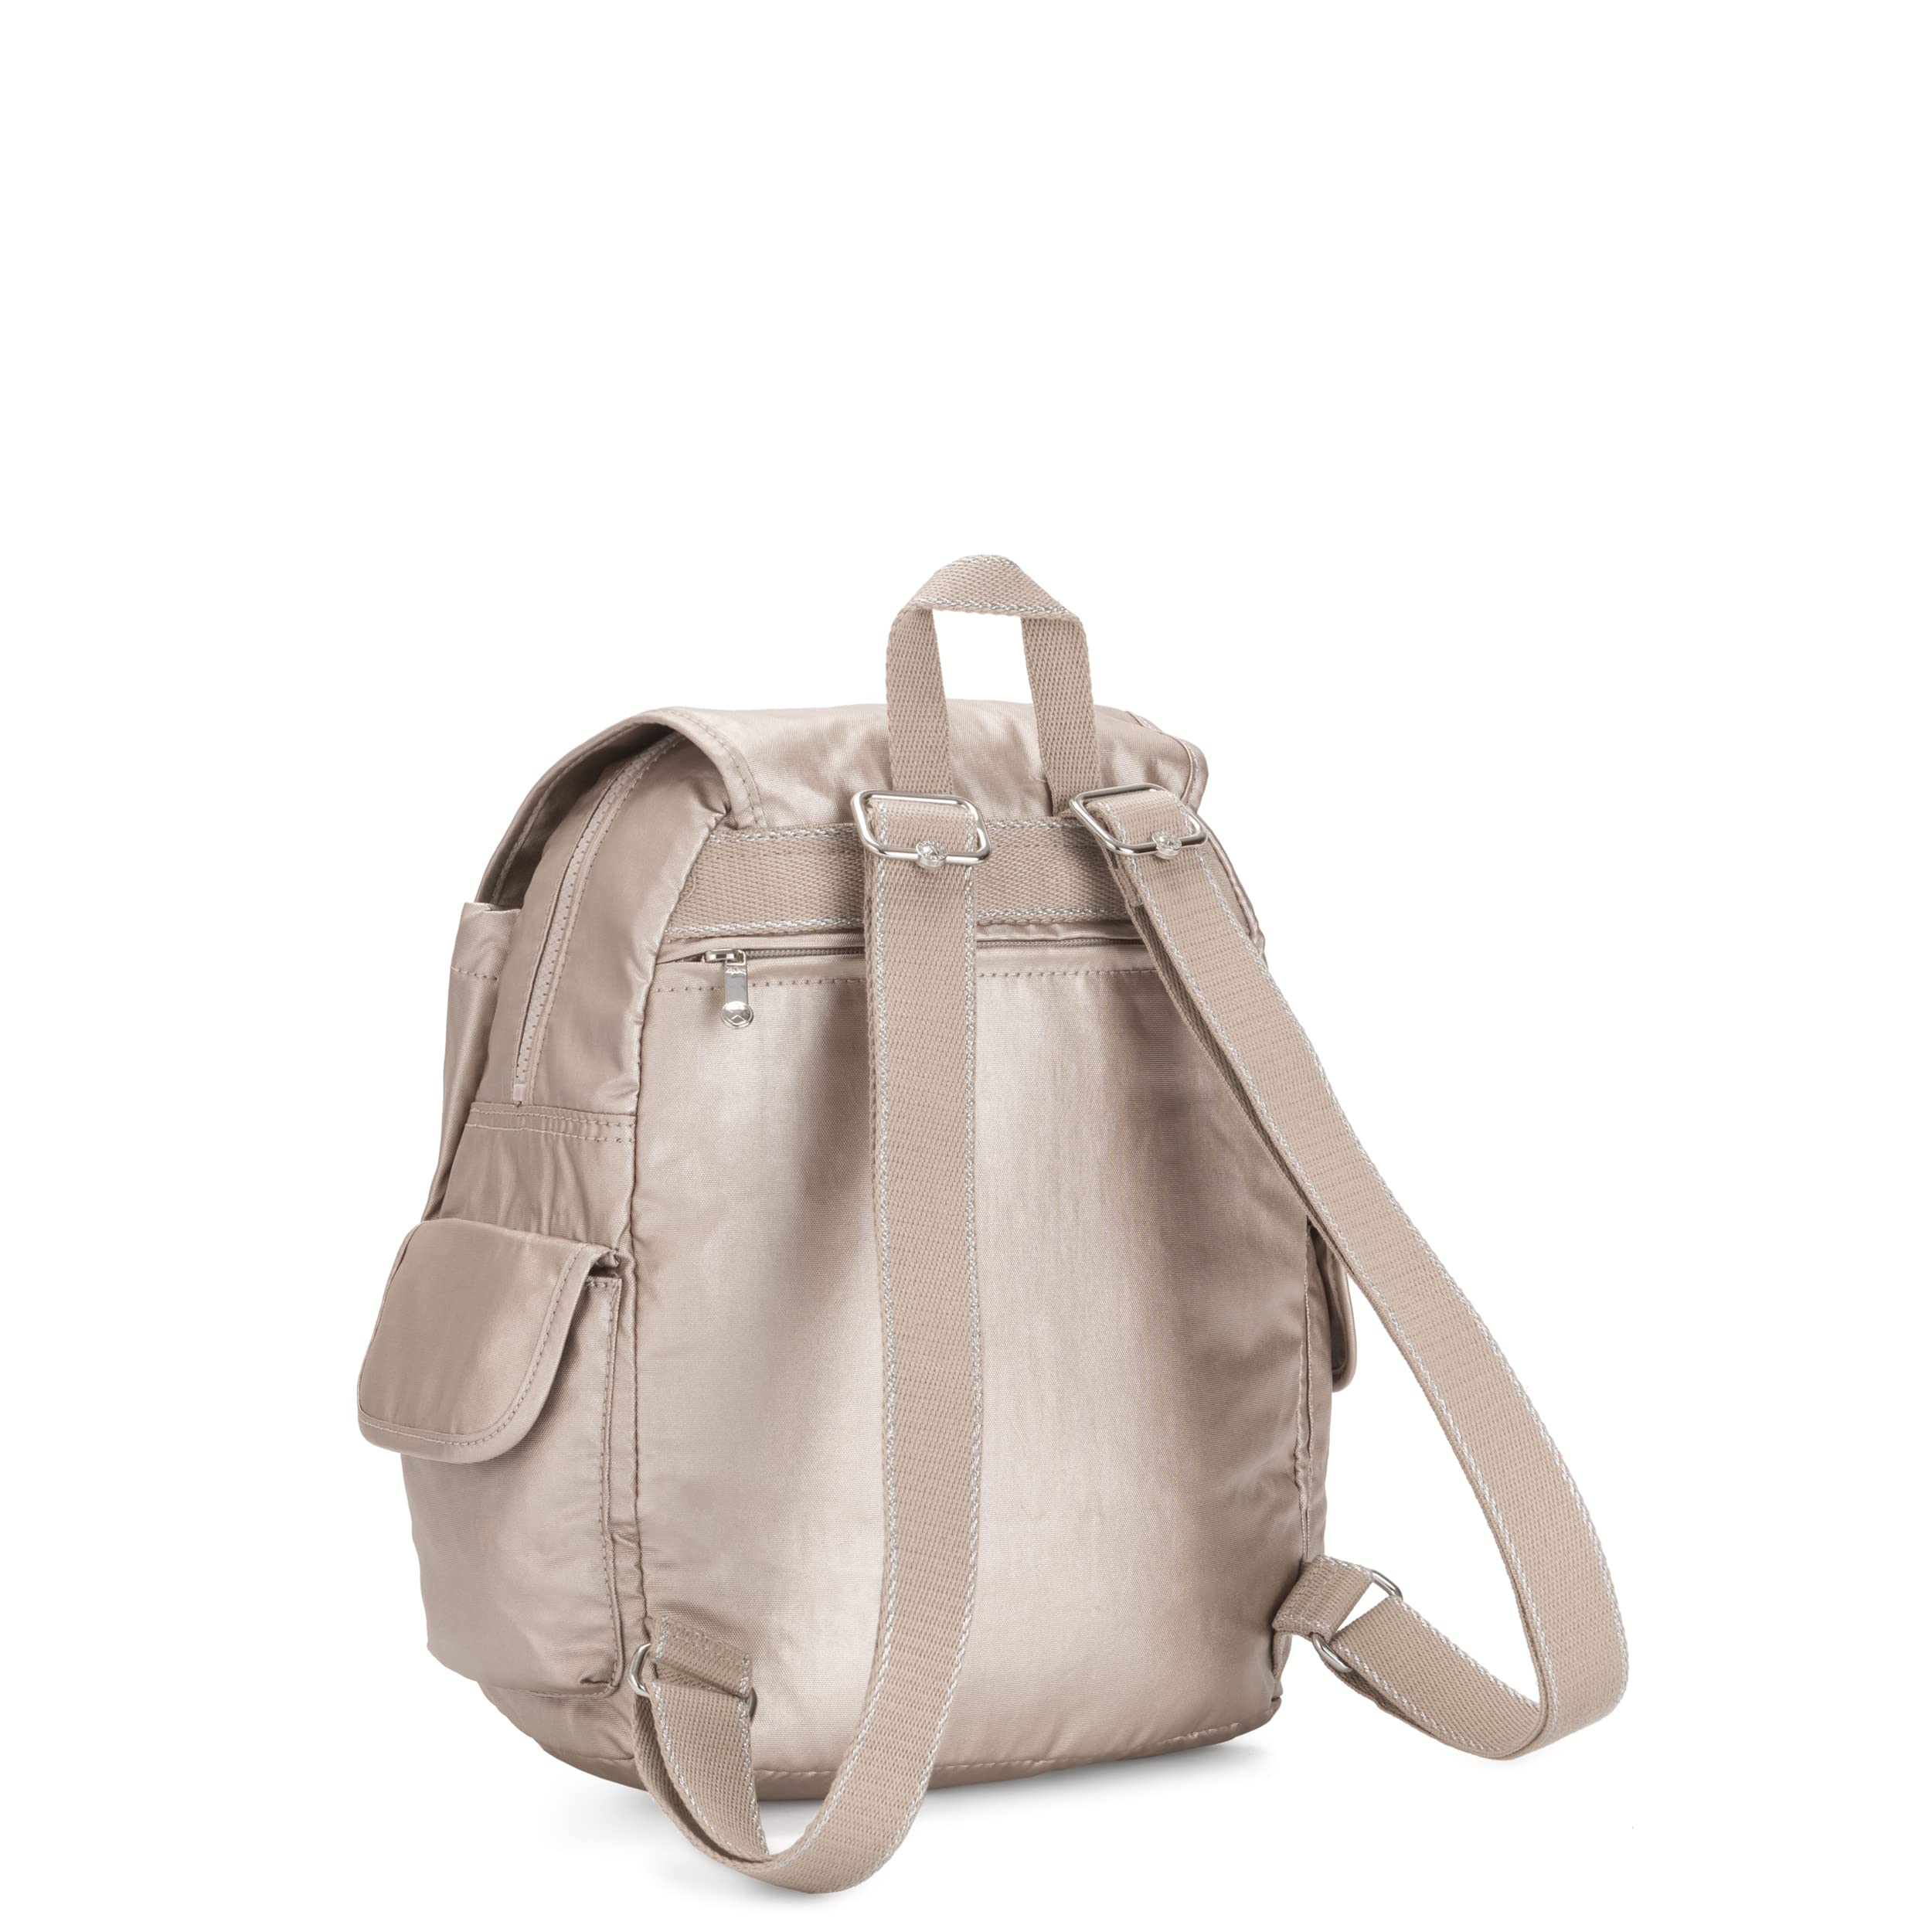 Kipling Women's City Pack Small Backpack, Lightweight Versatile Daypack, Bag, Metallic Glow, 10.75''L x 13.25''H x 7.5''D